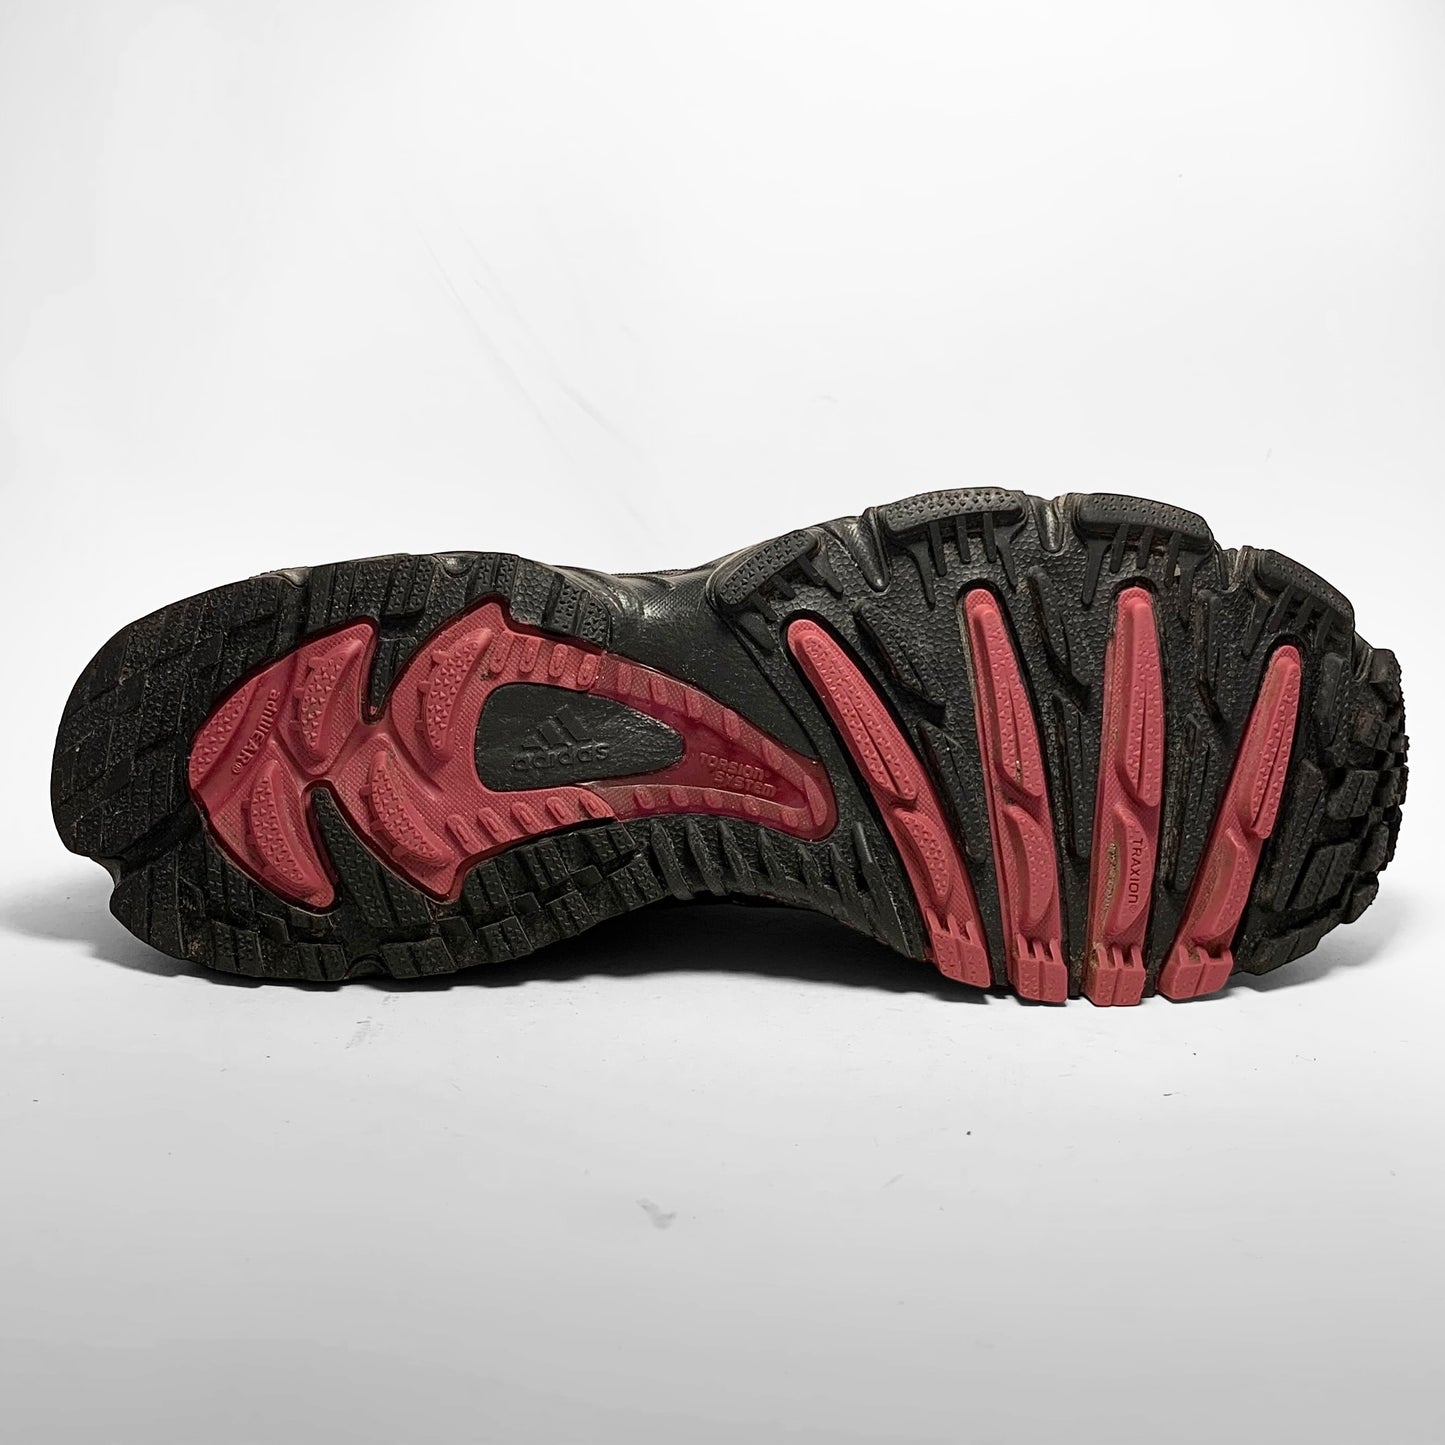 Adidas Trediac Climaproof GTX (2010)